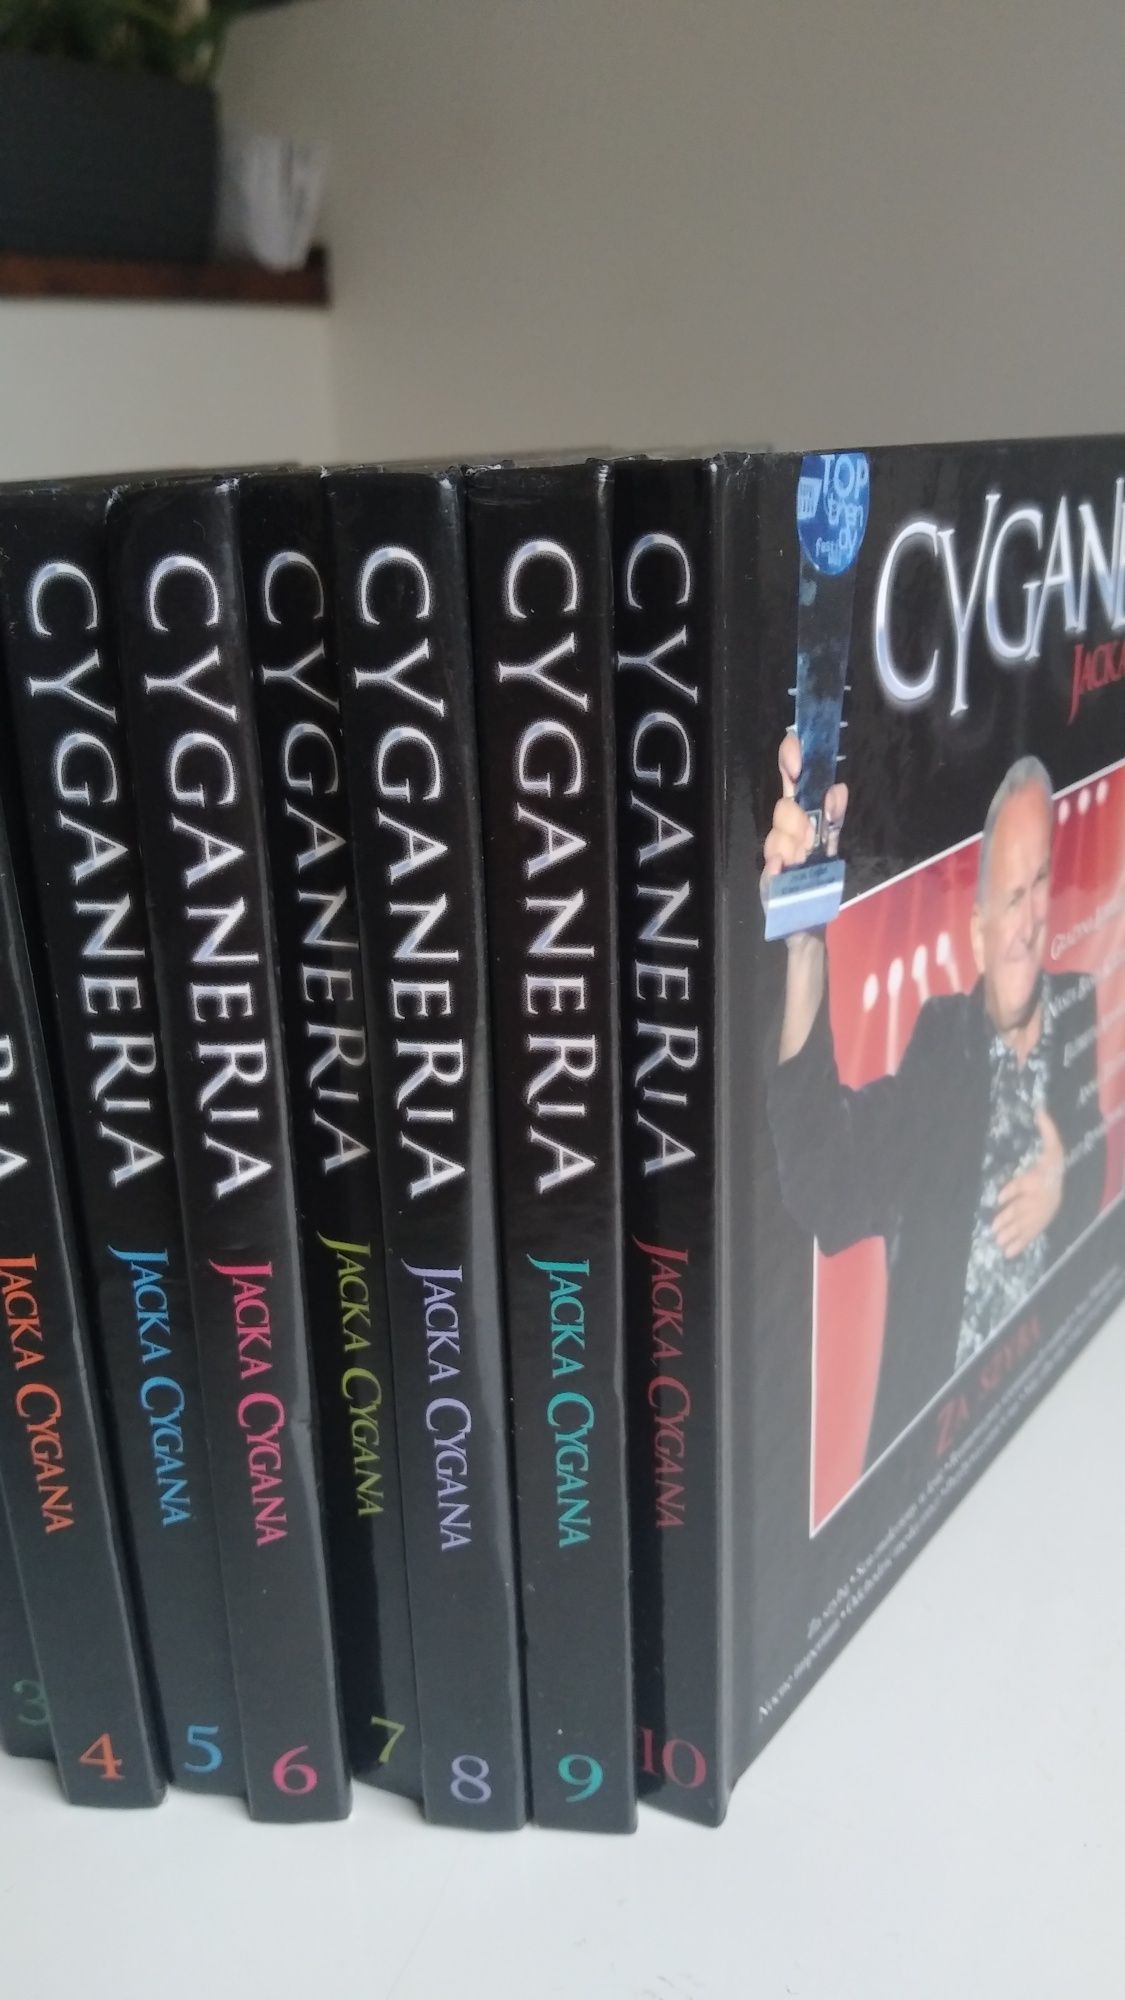 Cyganeria Jacek Cygan 3-10 CD